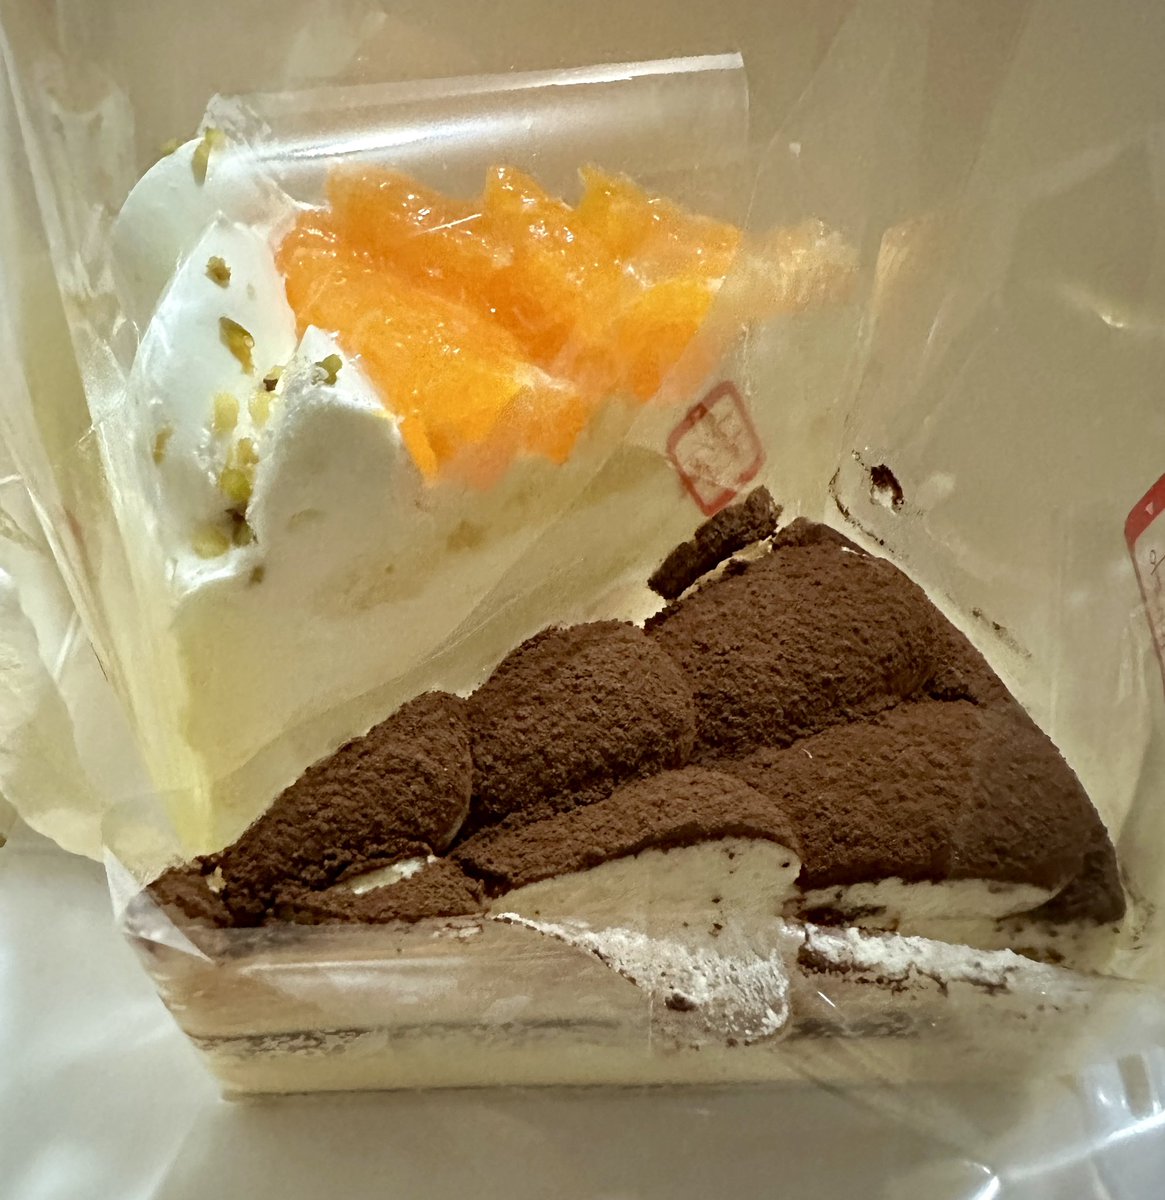 😋😋 #芝士及慕斯蛋糕 #熊本不知火柑忌廉蛋糕 #KumamotoShiranuiOrangeCreamCake #cake #dessert #ItalianTomato